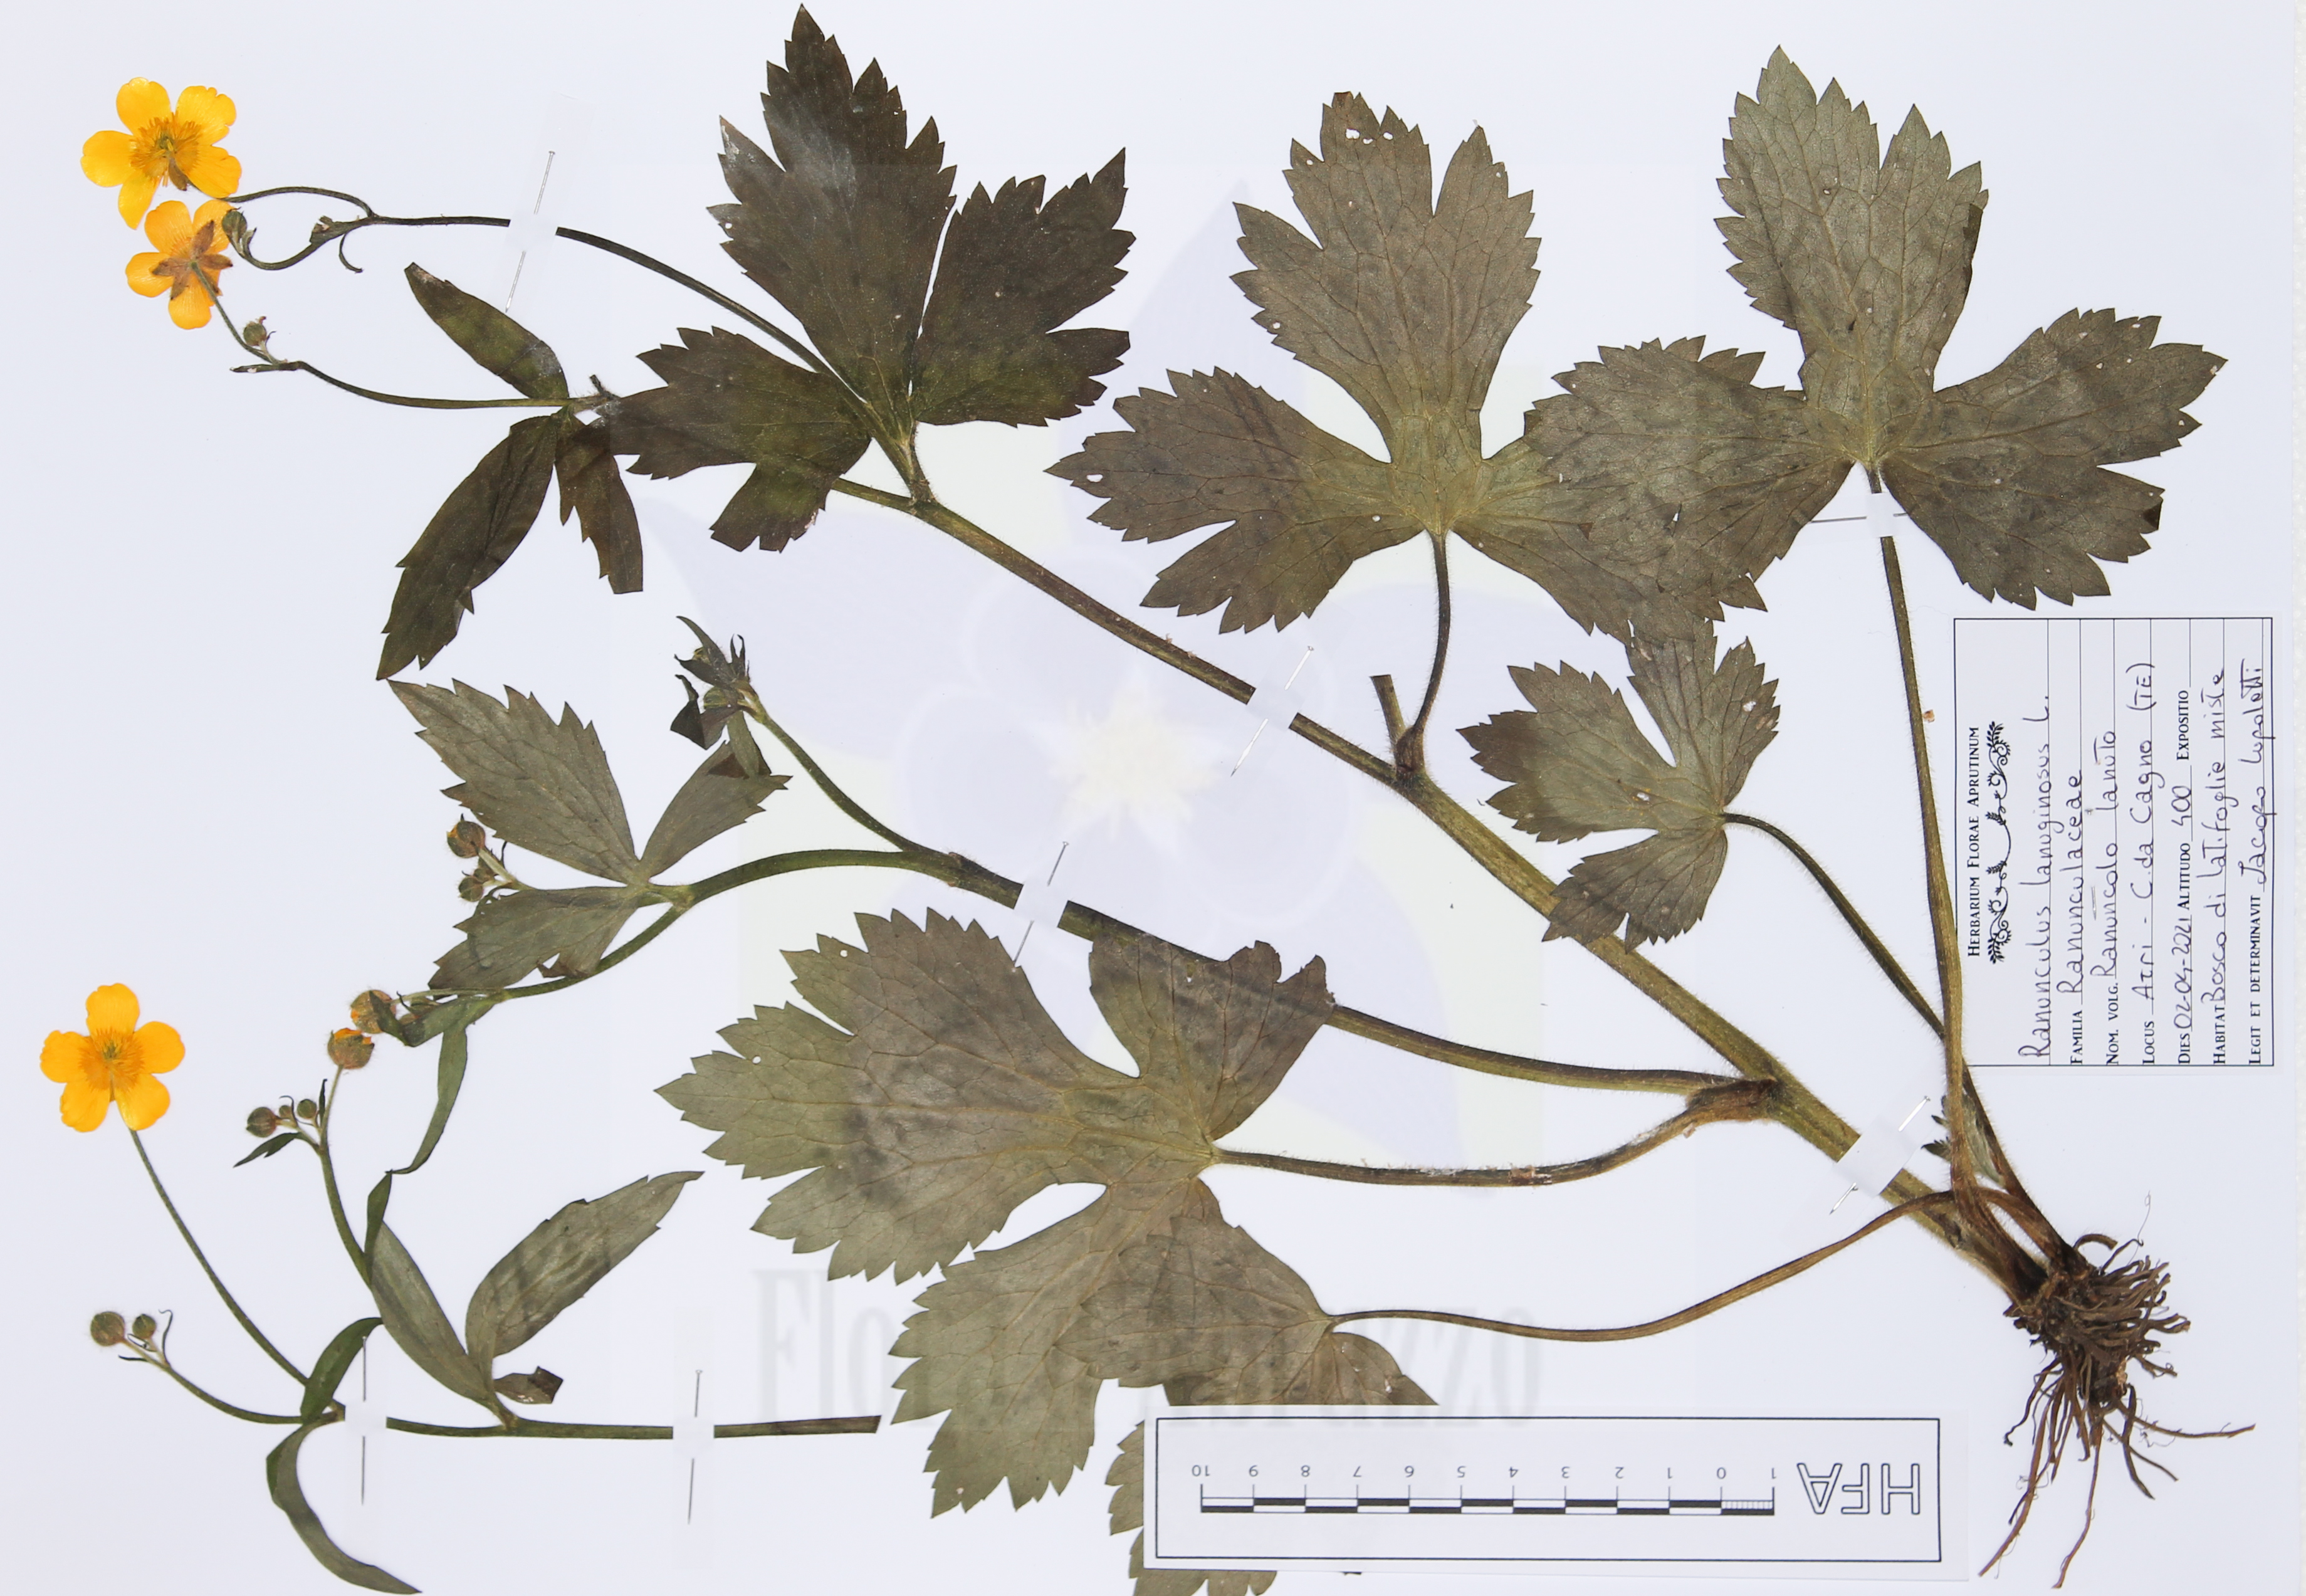 Ranunculus lanuginosus L.